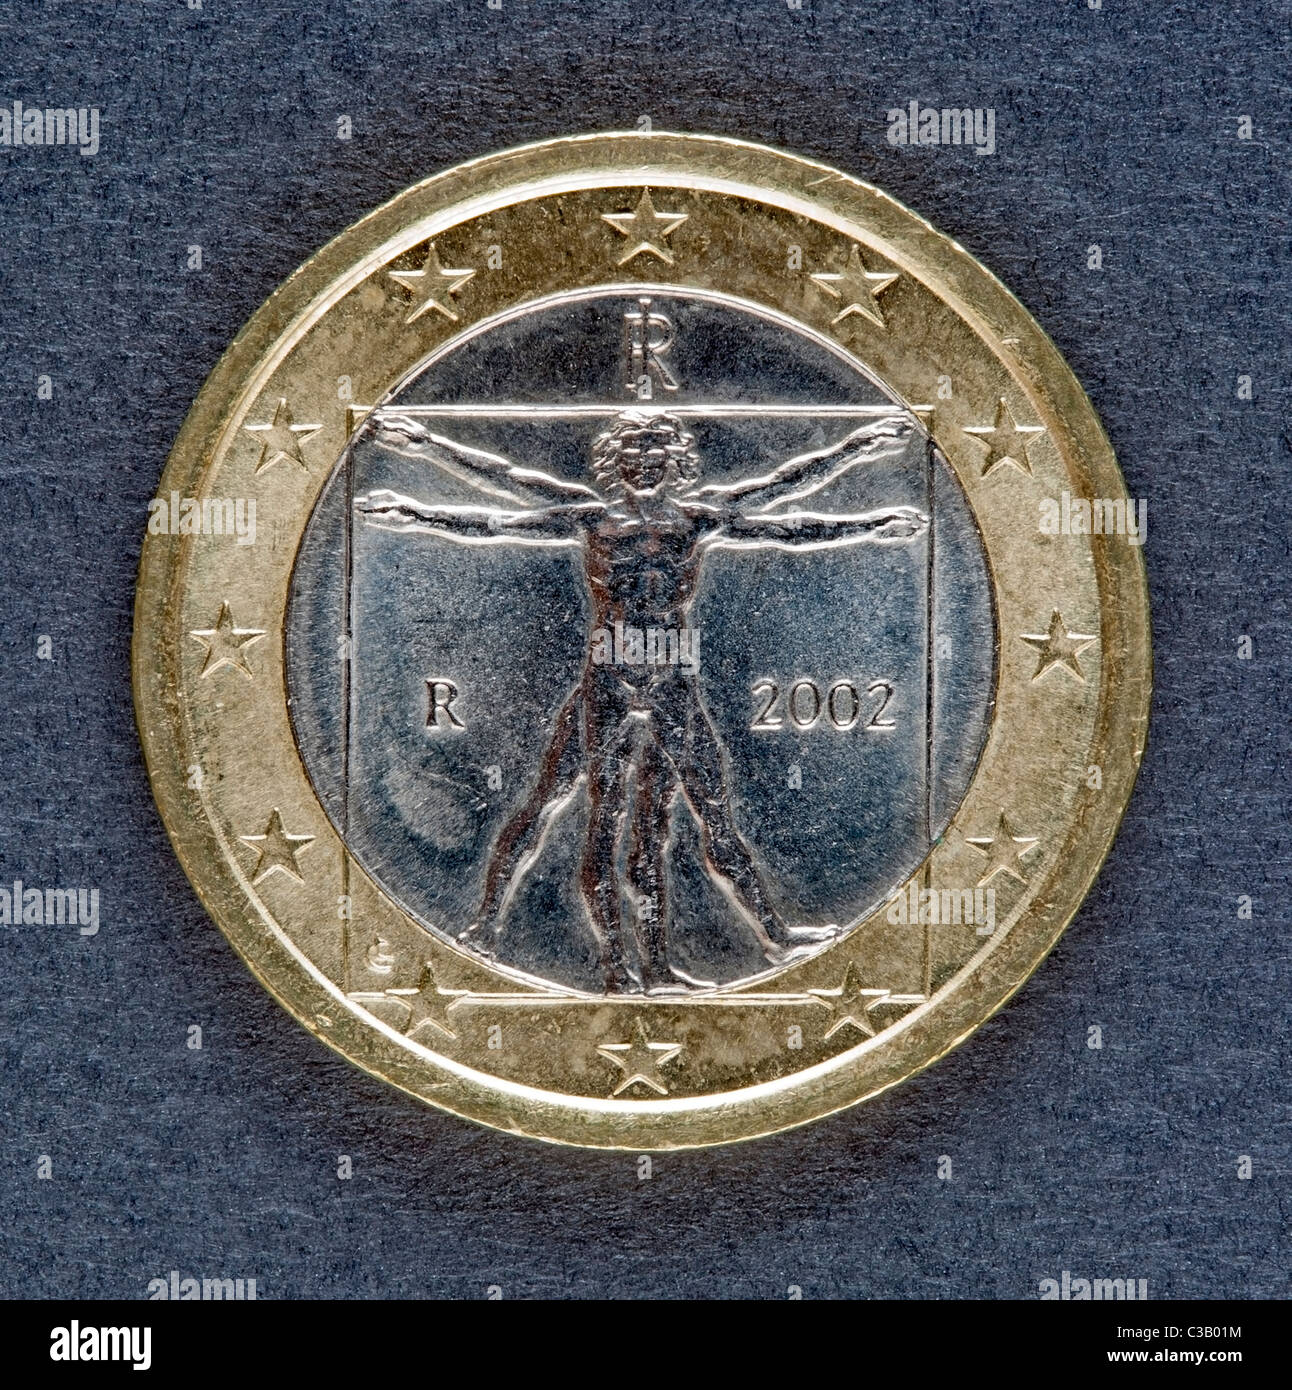 Italian euro coin one -Fotos und -Bildmaterial in hoher Auflösung – Alamy